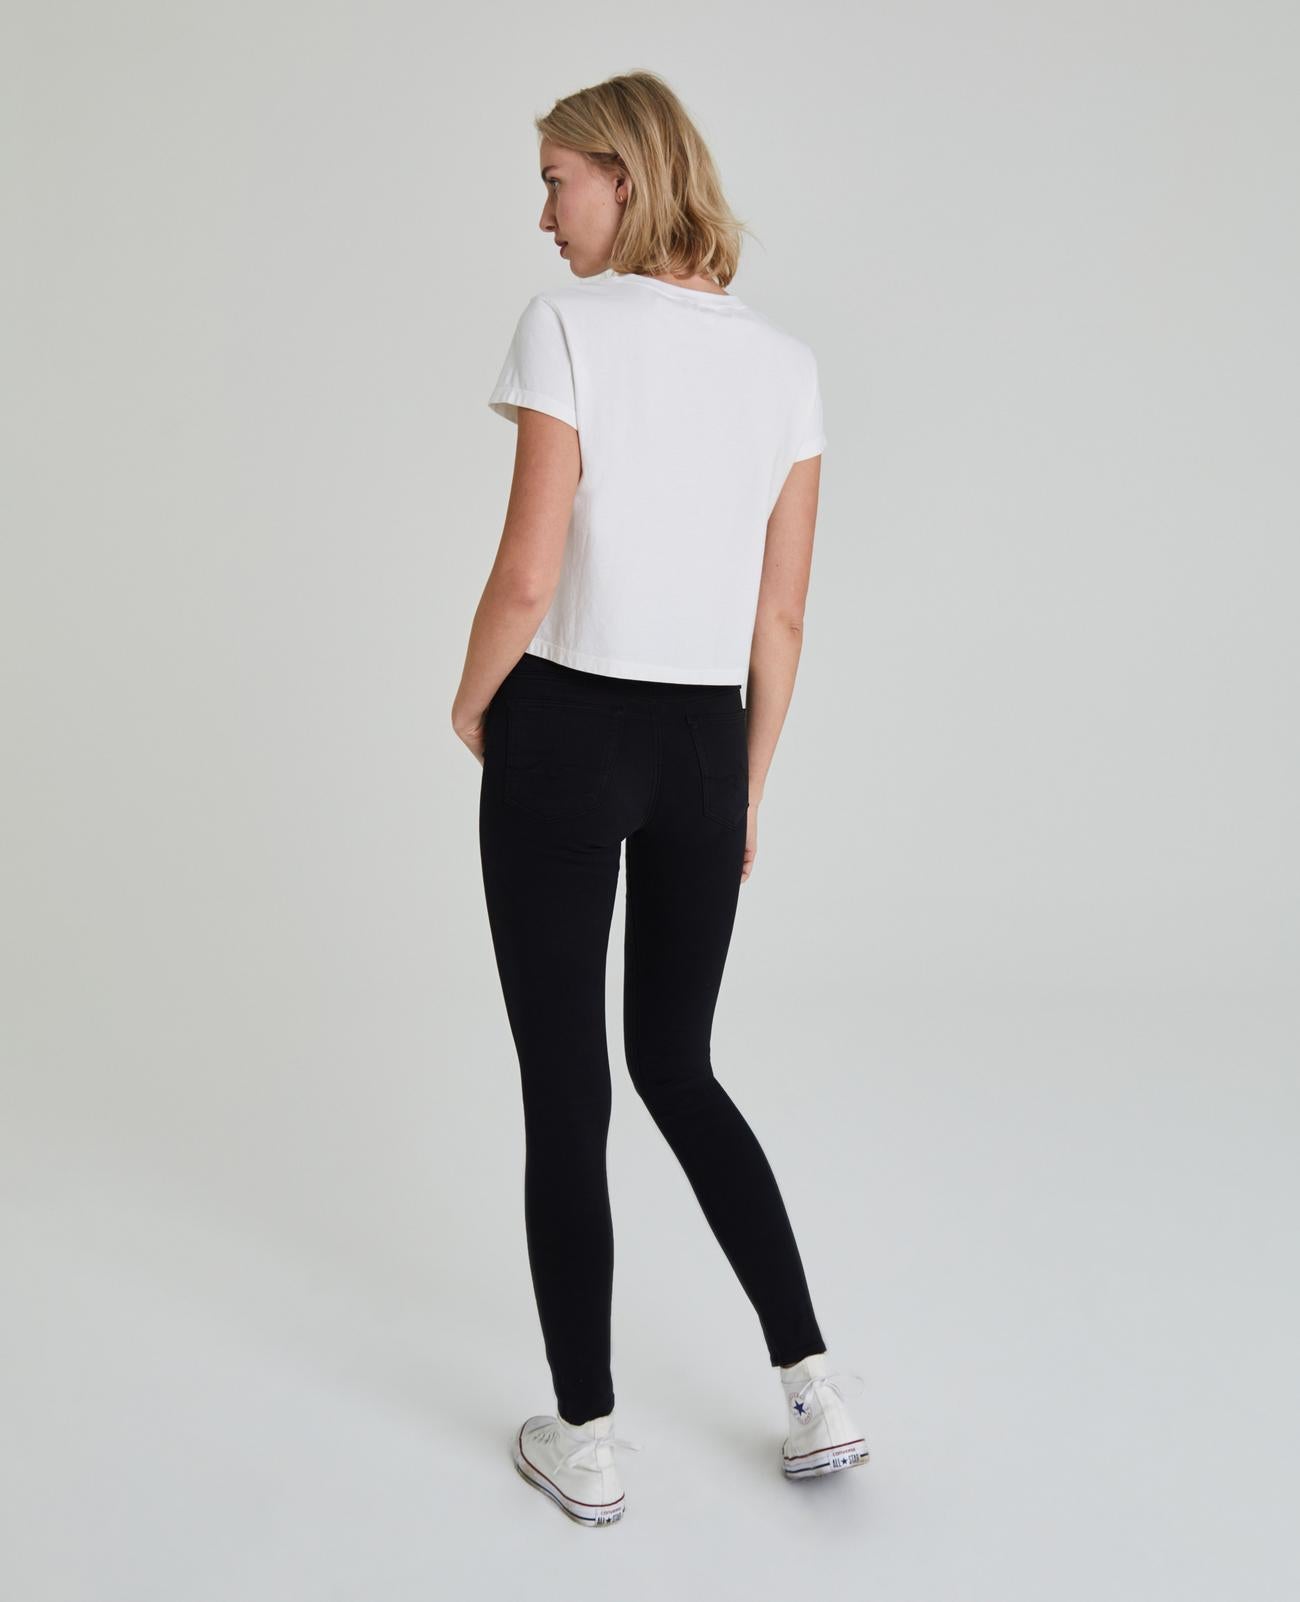 Farrah Mid Rise Skinny Jean - Black - AG Jeans Canada - Danali